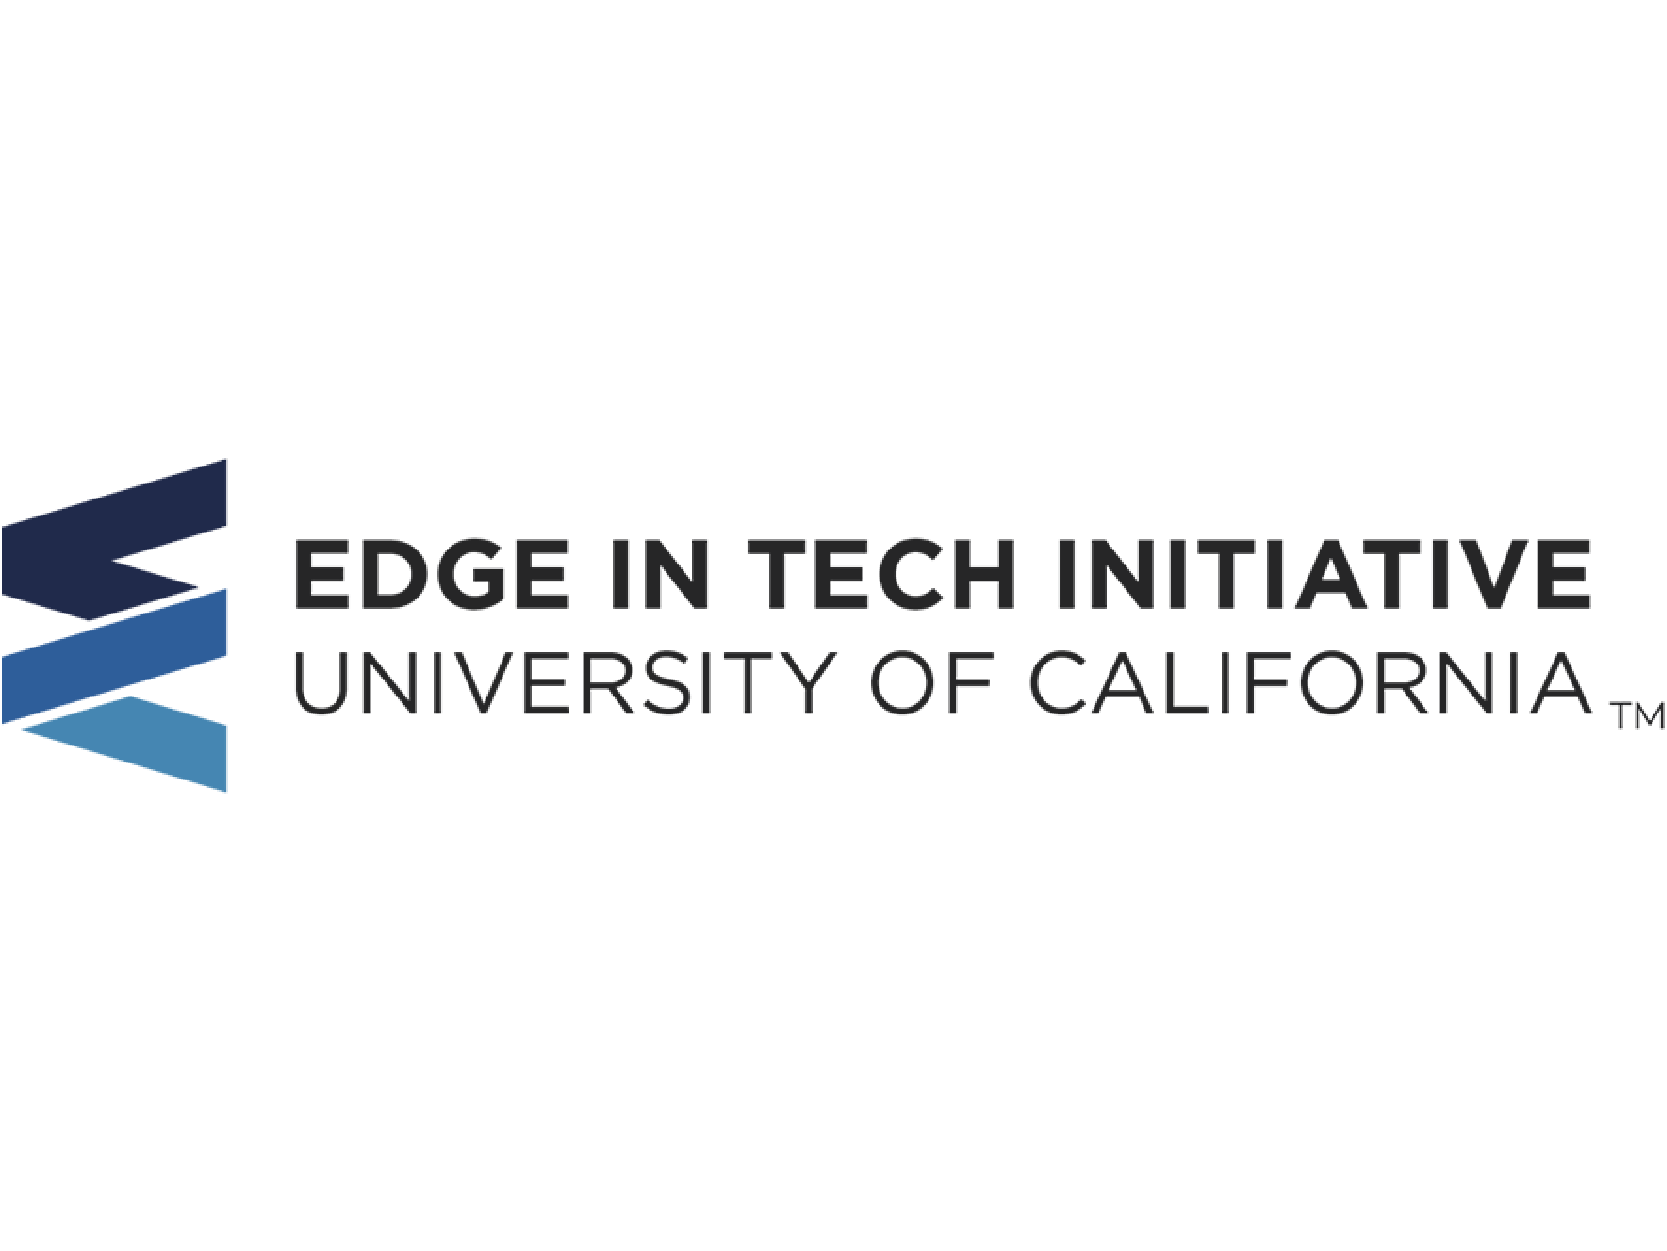 Edge in Tech Initiative at the University of California